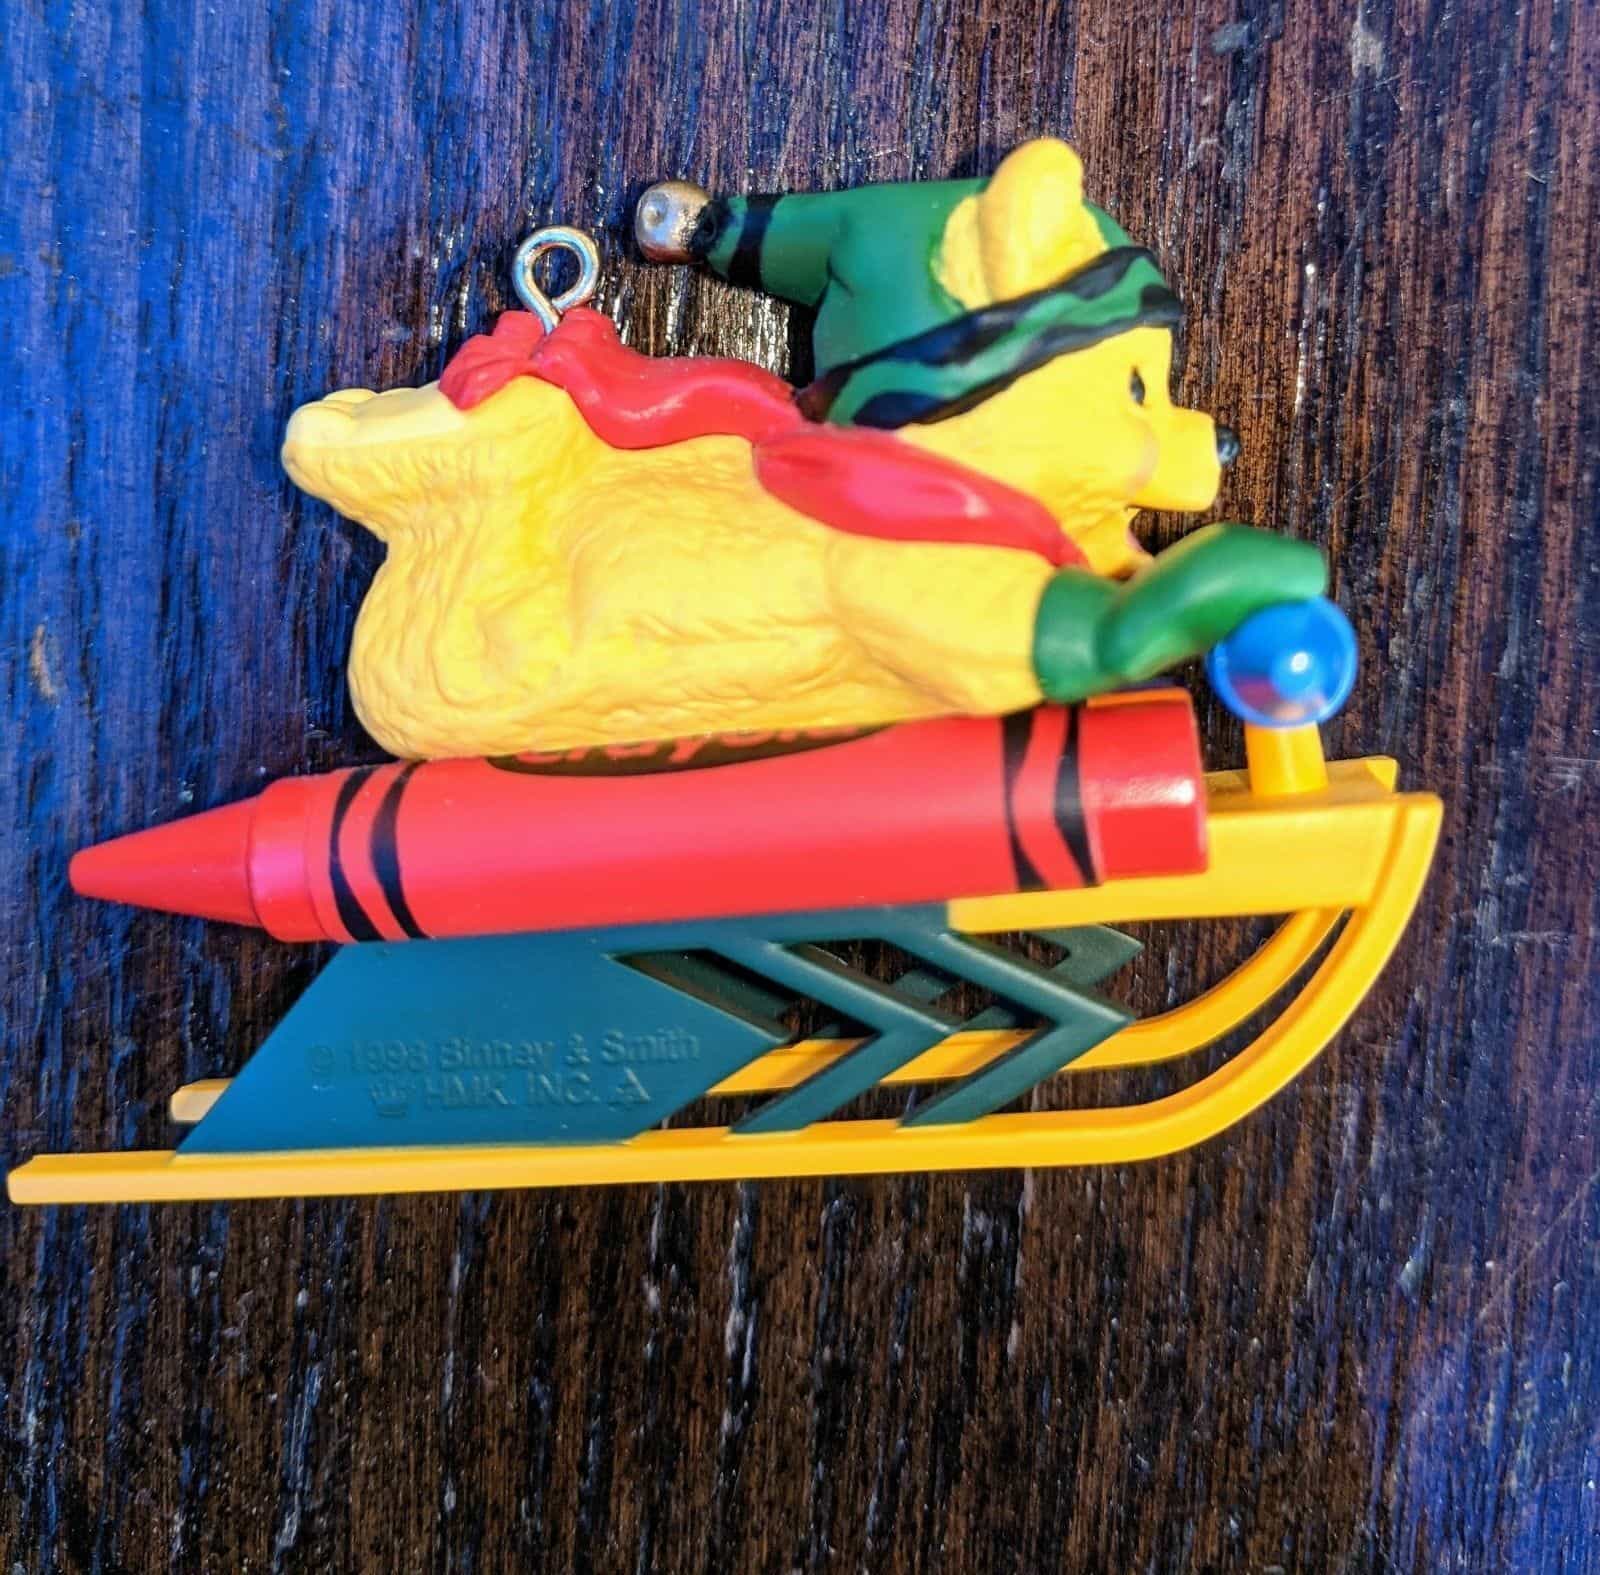 Bright Sledding Colors Crayola Keepsake Children’s Ornament